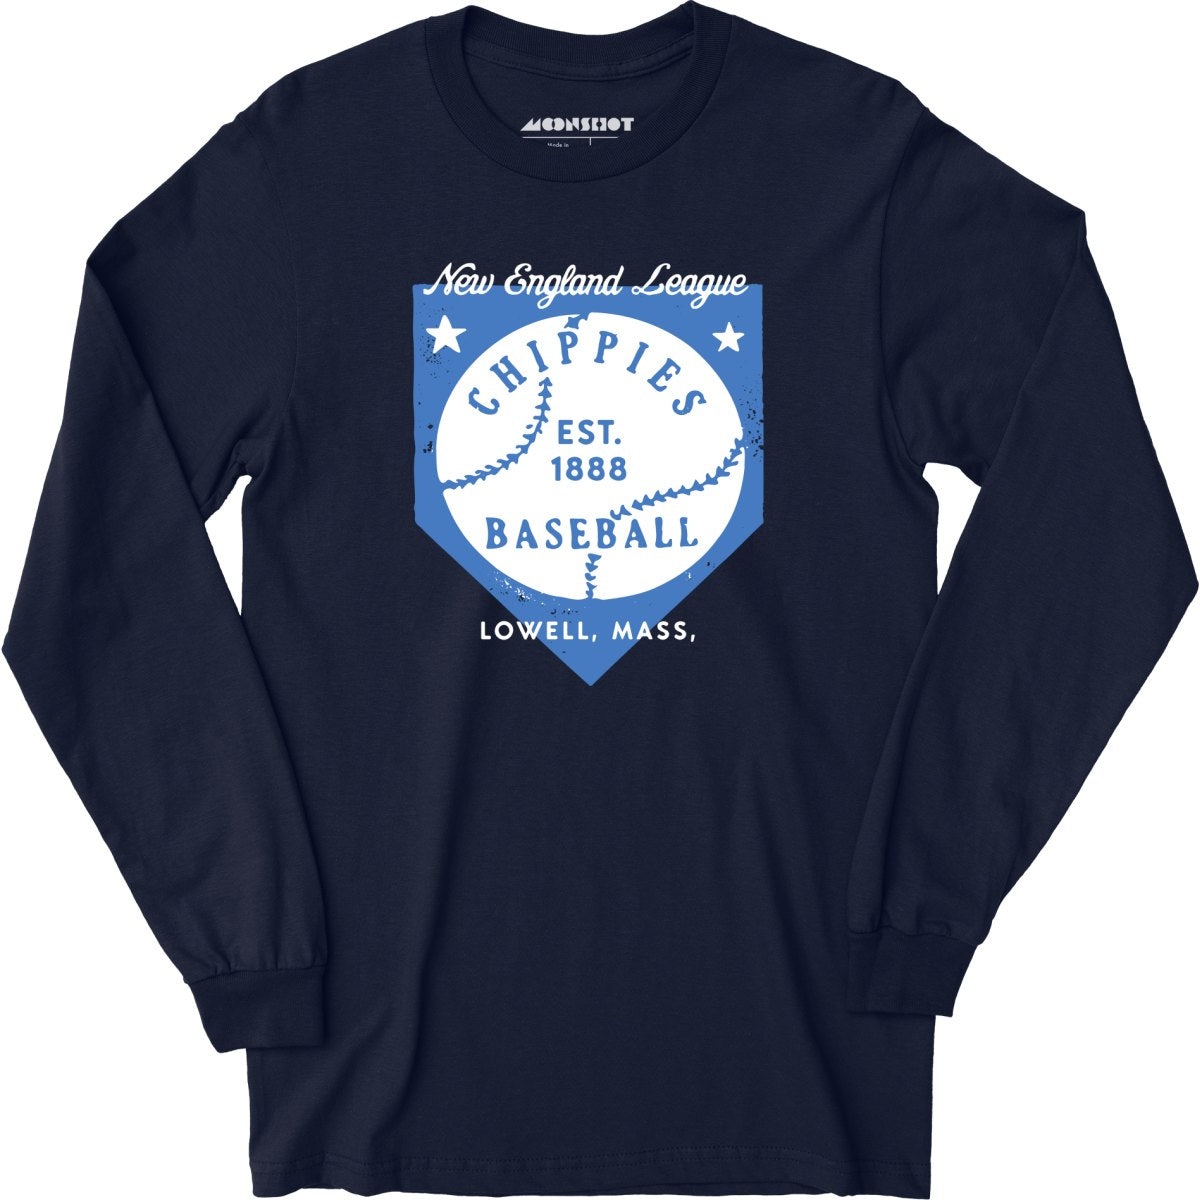 Lowell Chippies - Massachusetts - Vintage Defunct Baseball Teams - Long Sleeve T-Shirt